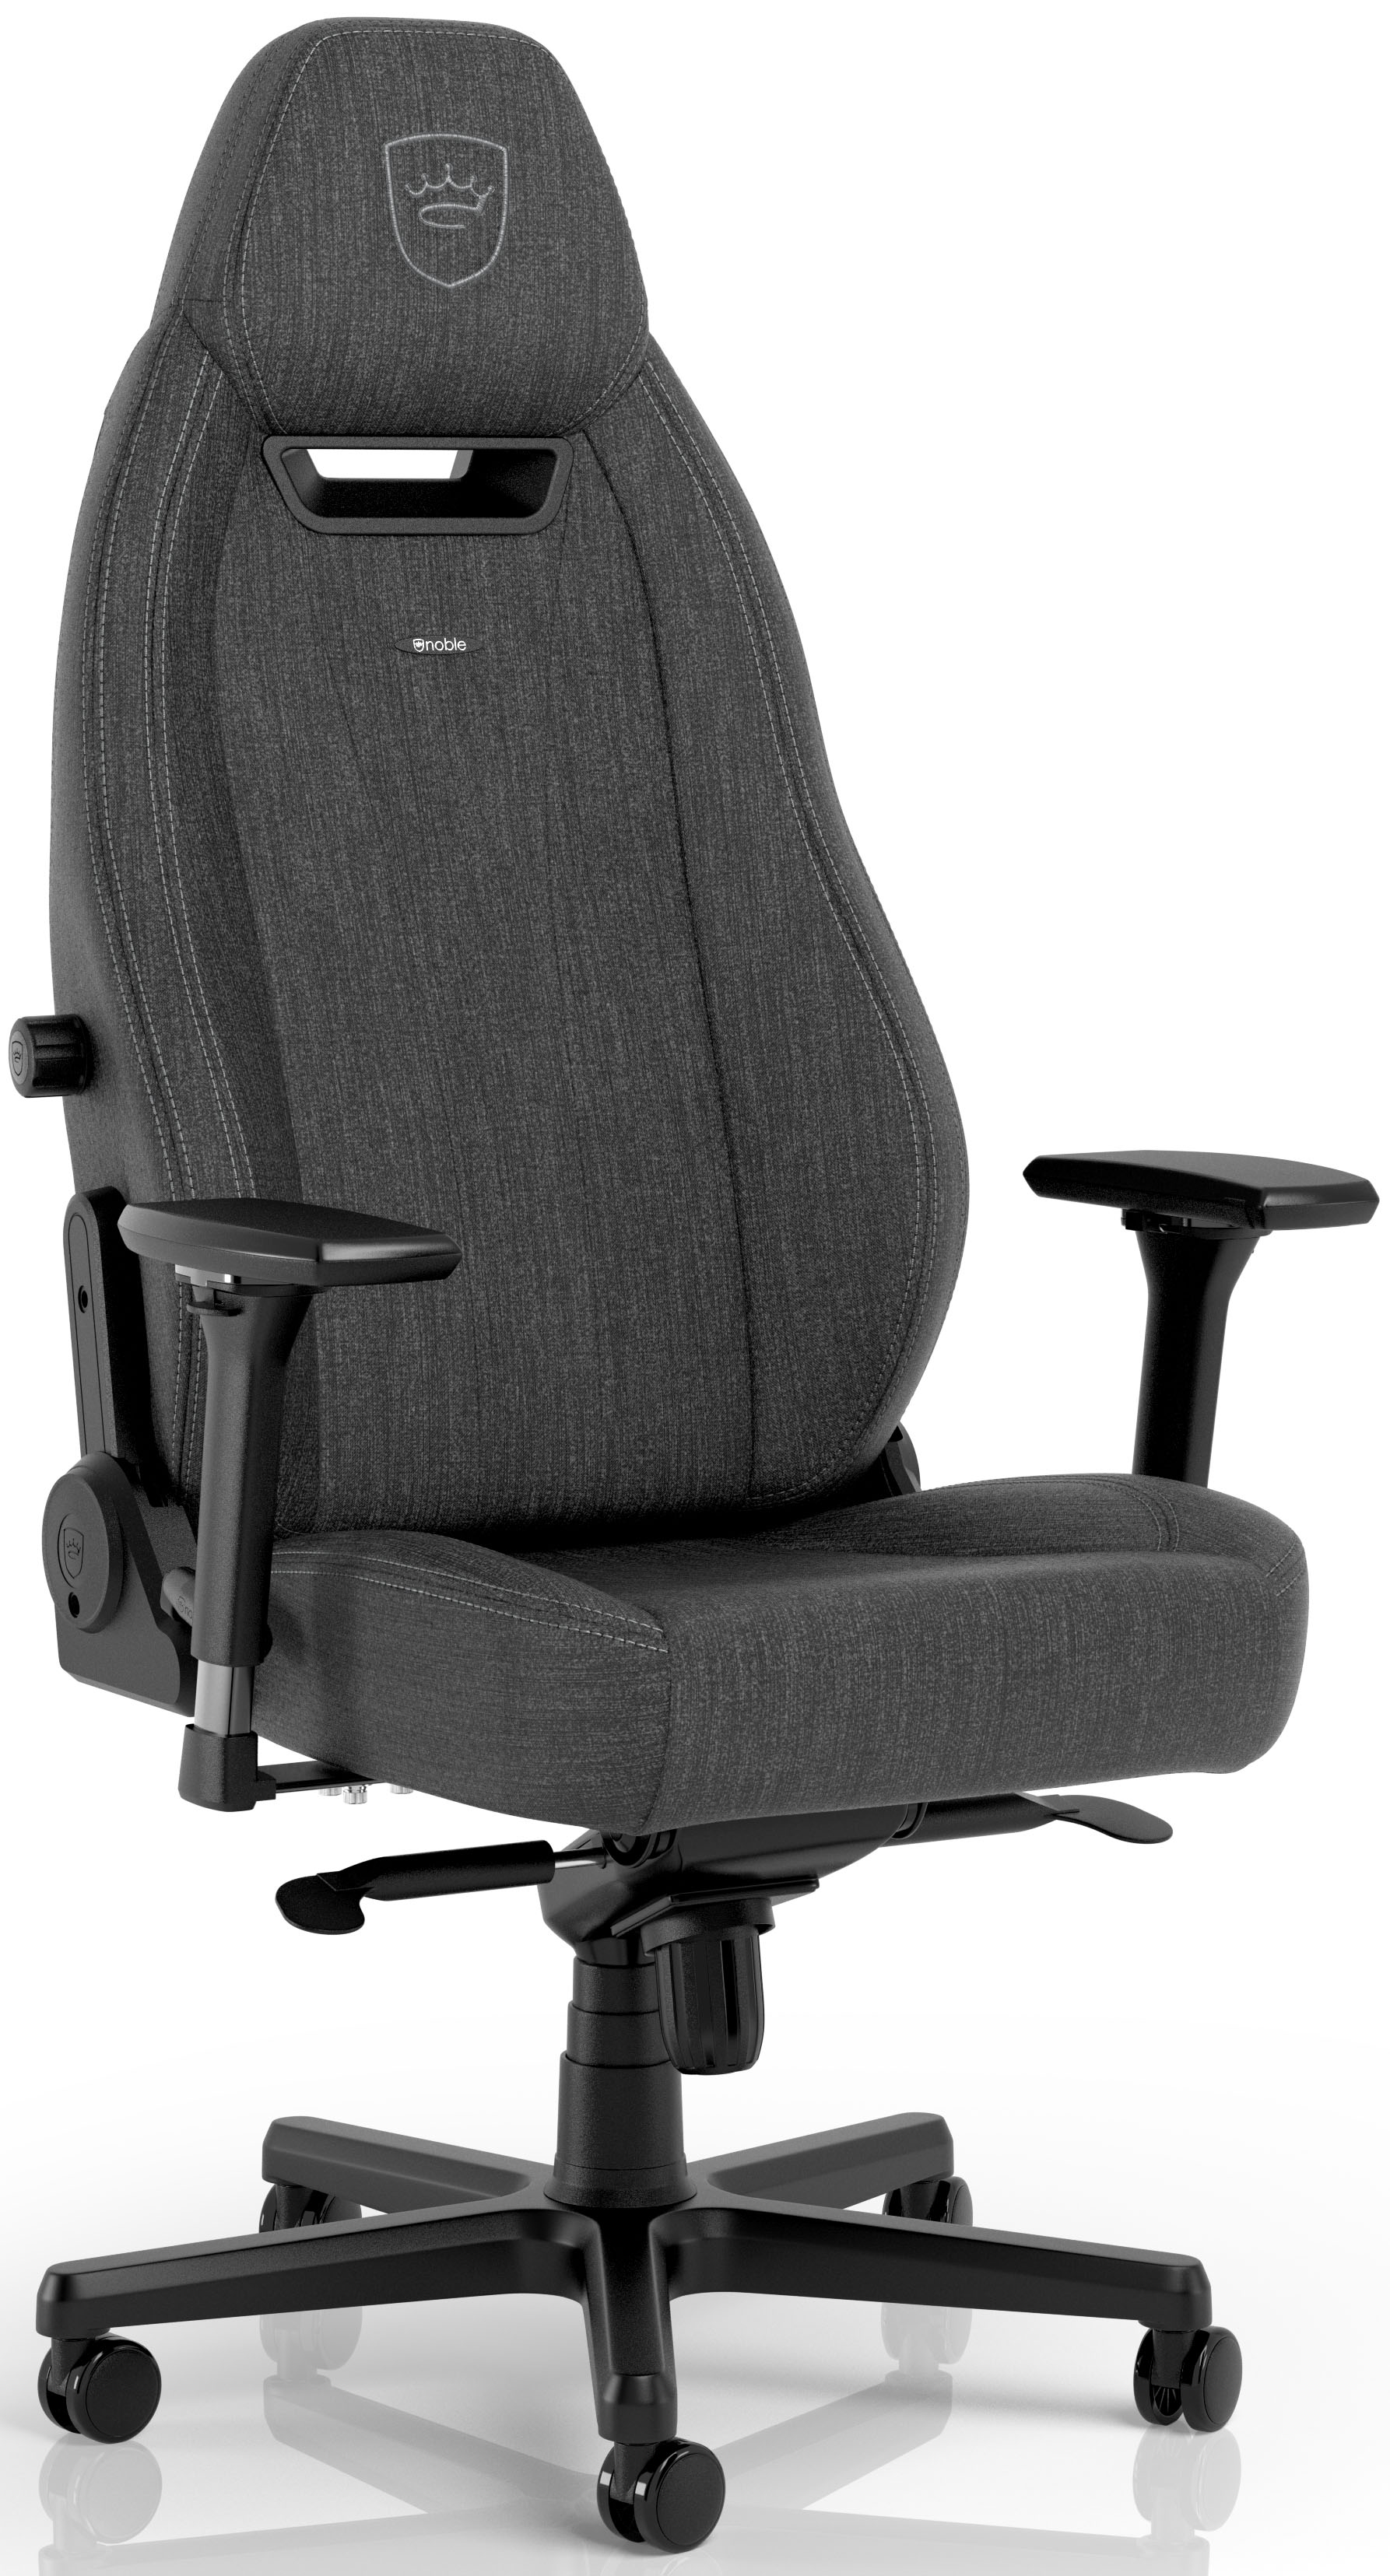 noblechairs - ** B Grade ** Cadeira noblechairs LEGEND TX - Fabric Edition Anthracite